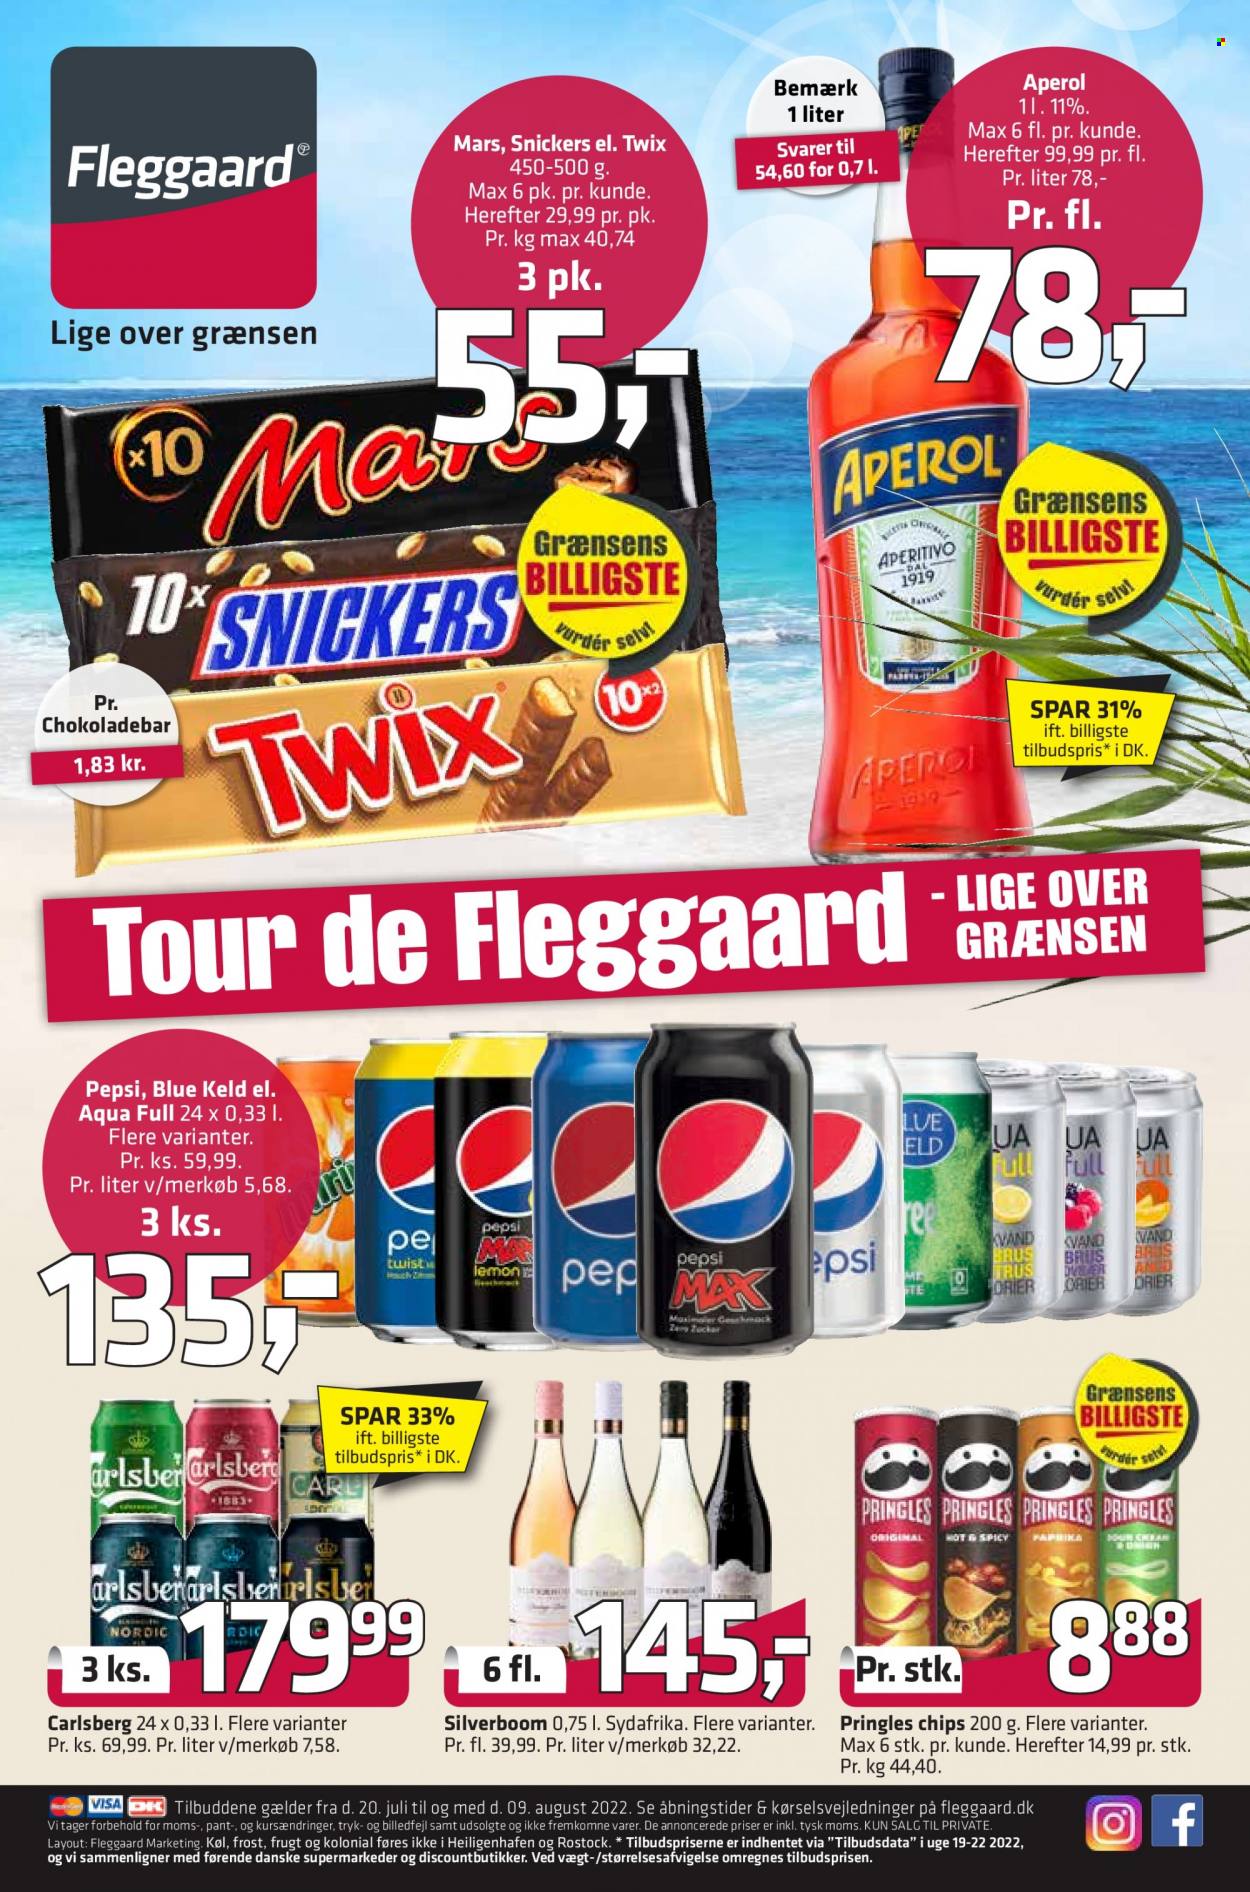 Fleggaard tilbud  - 20.07.2022 - 09.08.2022 - tilbudsprodukter - Carlsberg, øl, Blue Keld, Snickers, Twix, chokoladebar, Mars, chips, pringles, Pepsi, Aperol. Side 1.